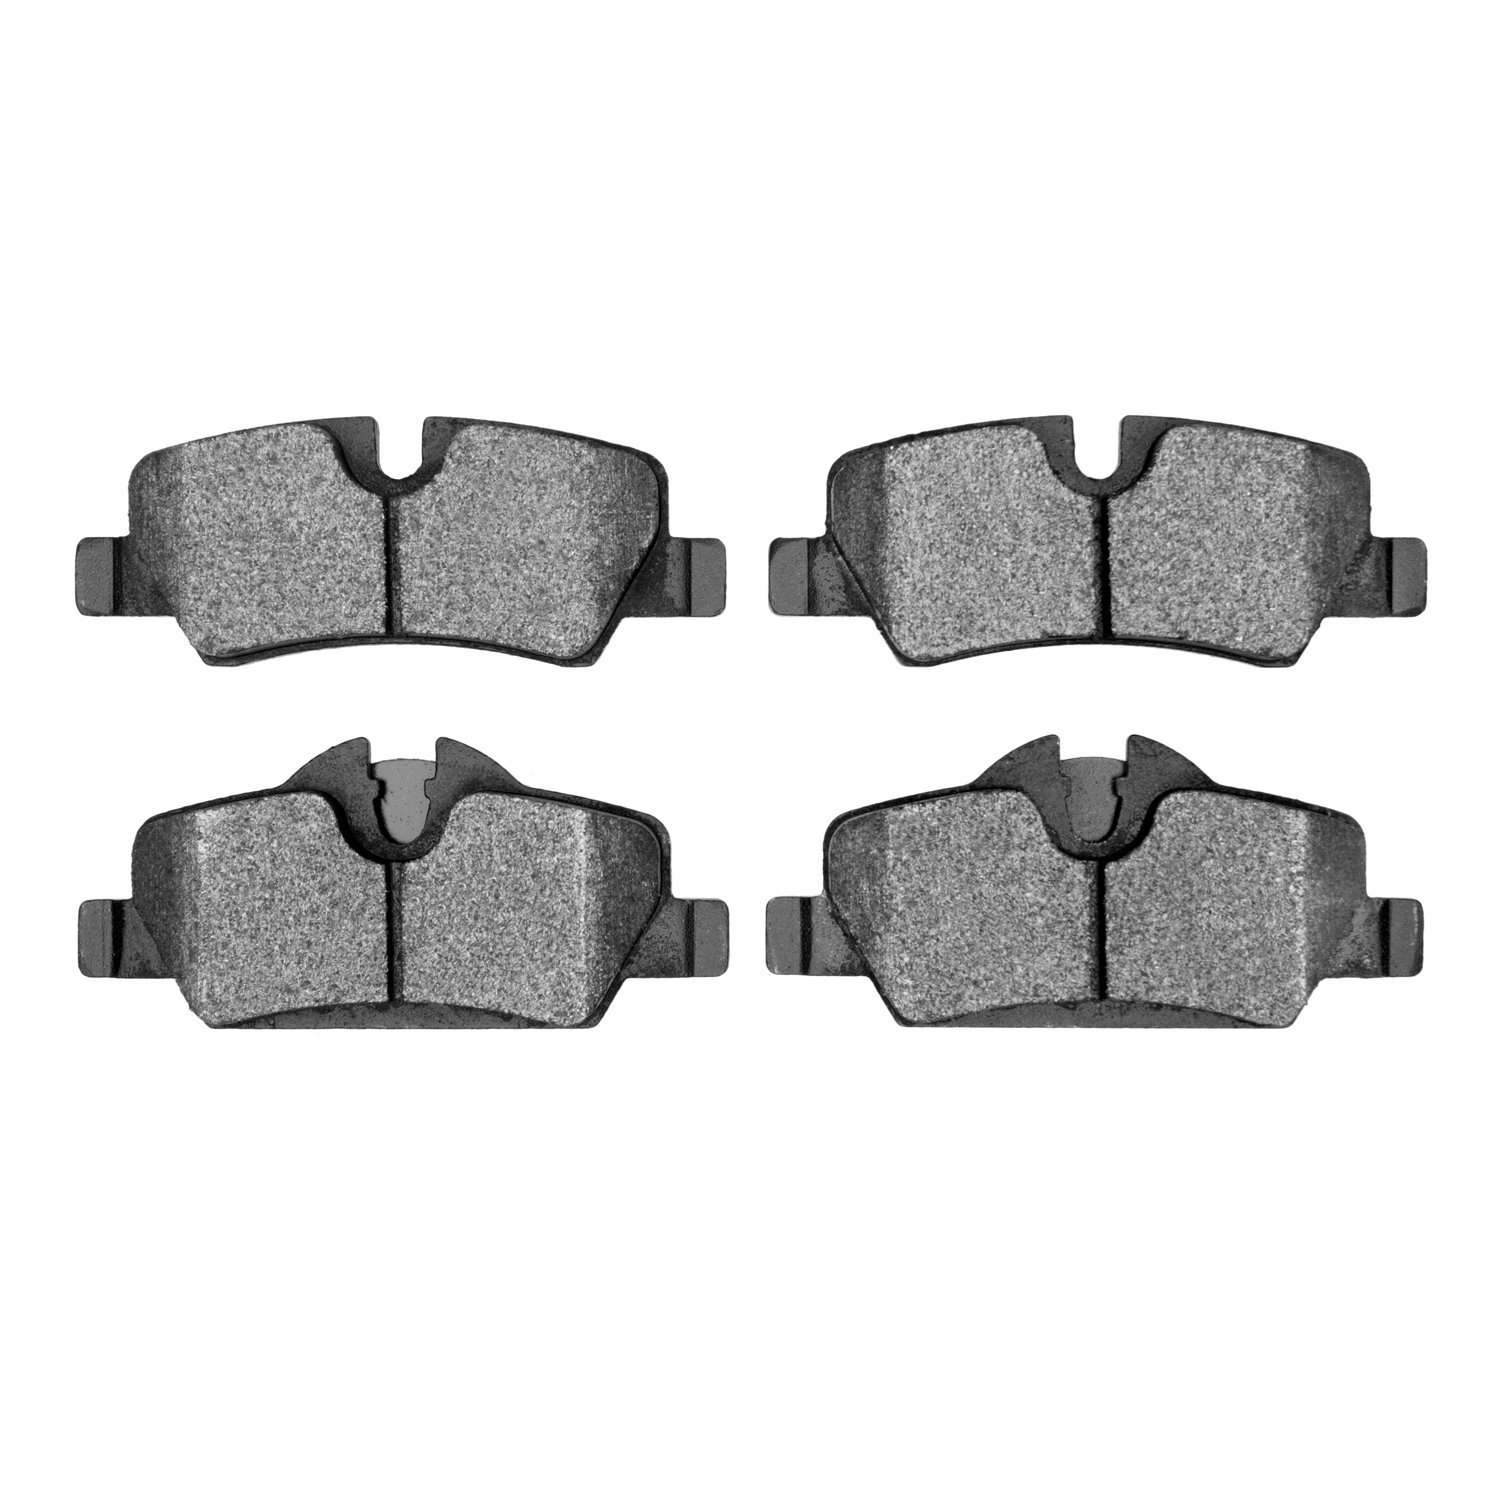 1552-1800-00 5000 Advanced Low-Metallic Brake Pads, Fits Select Mini, Position: Rear